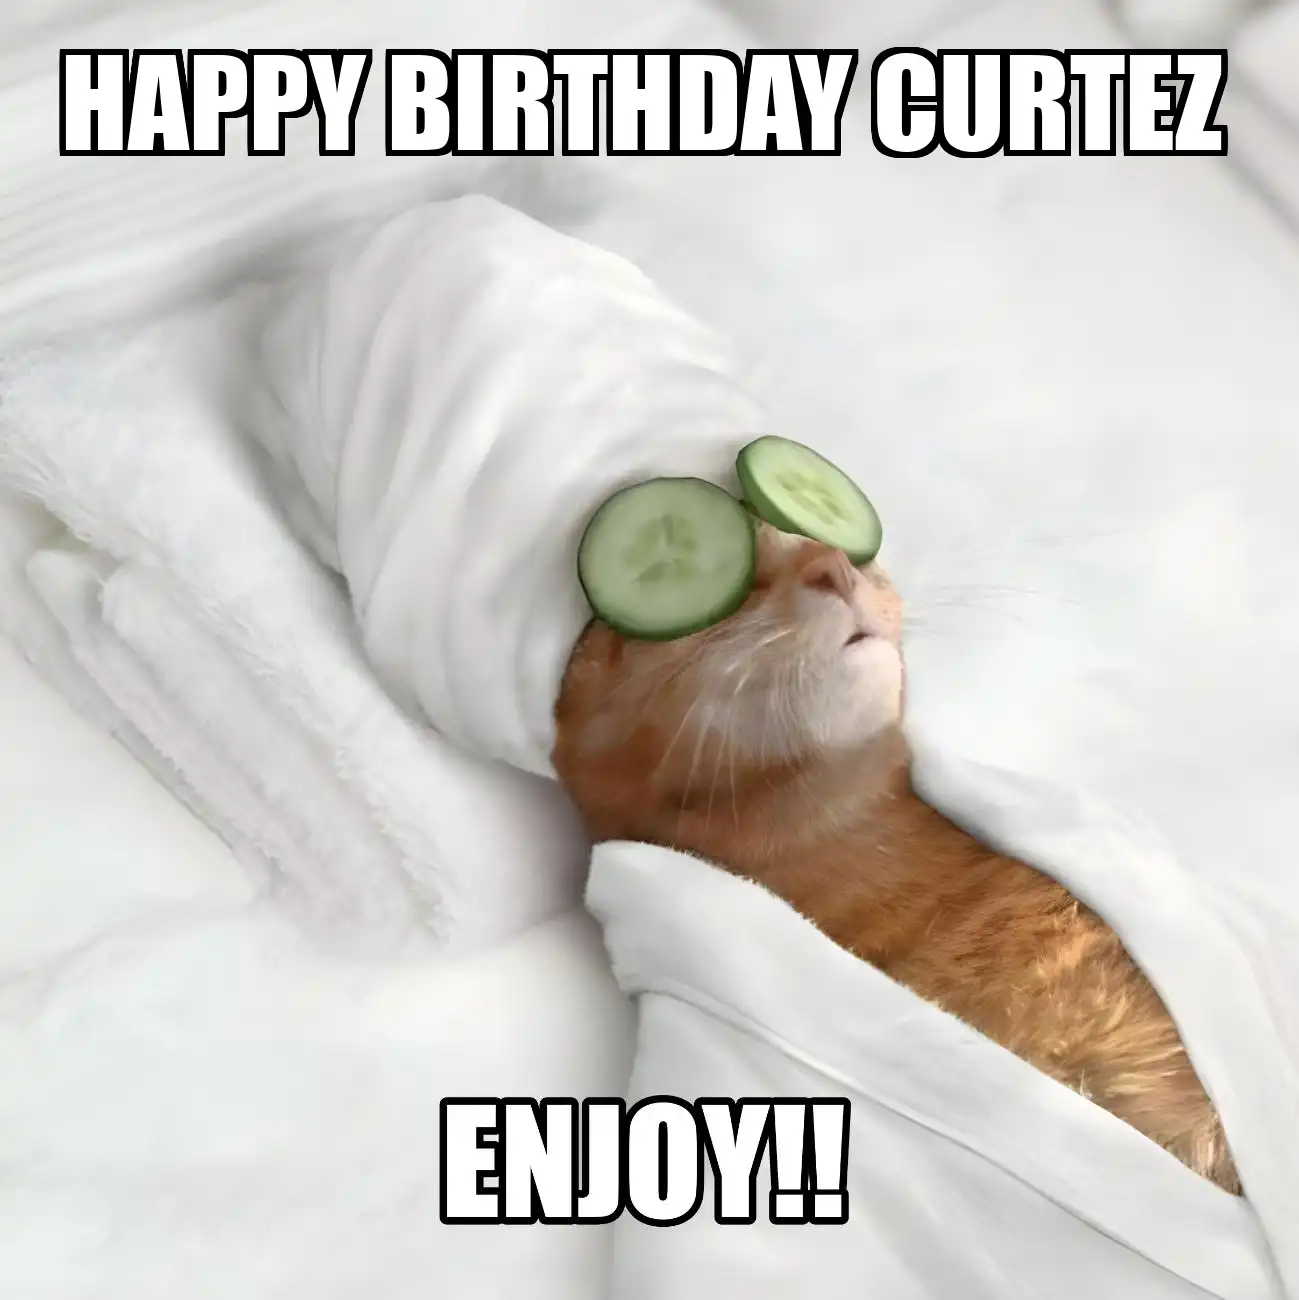 Happy Birthday Curtez Enjoy Cat Meme